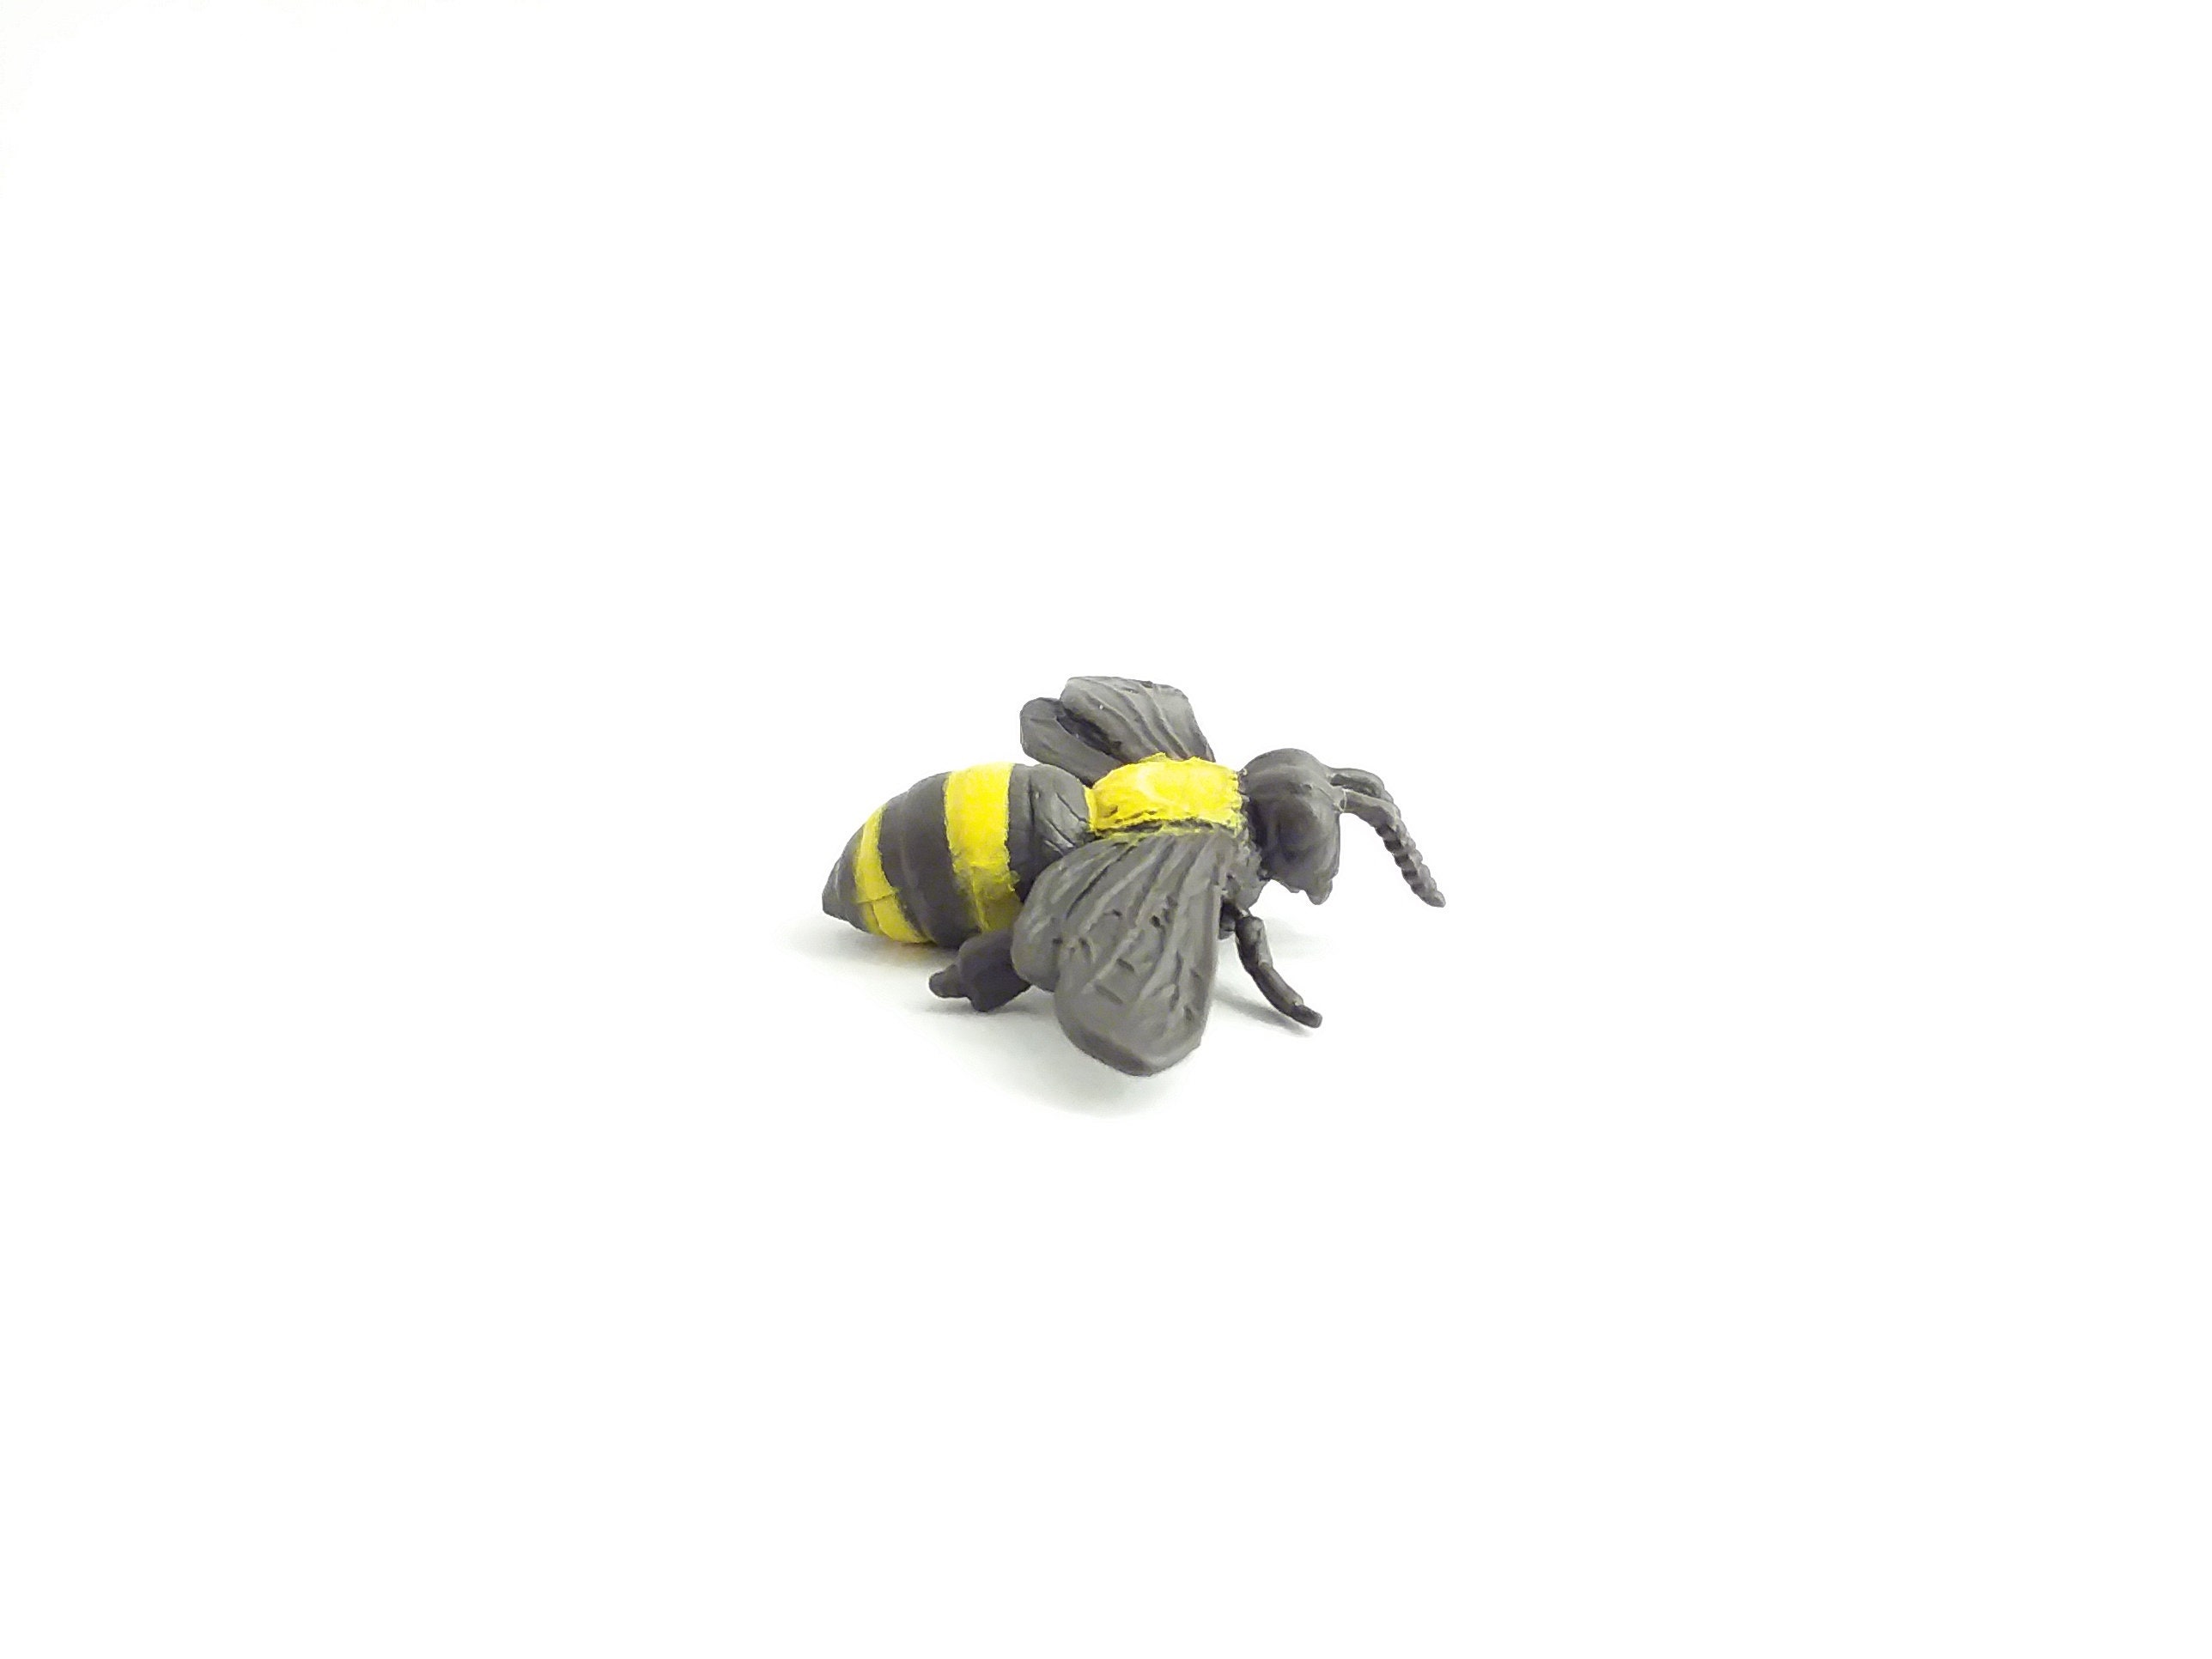 Vintage Happy Honey Bee Pull Toy Plastic Complete Body Wings Legs